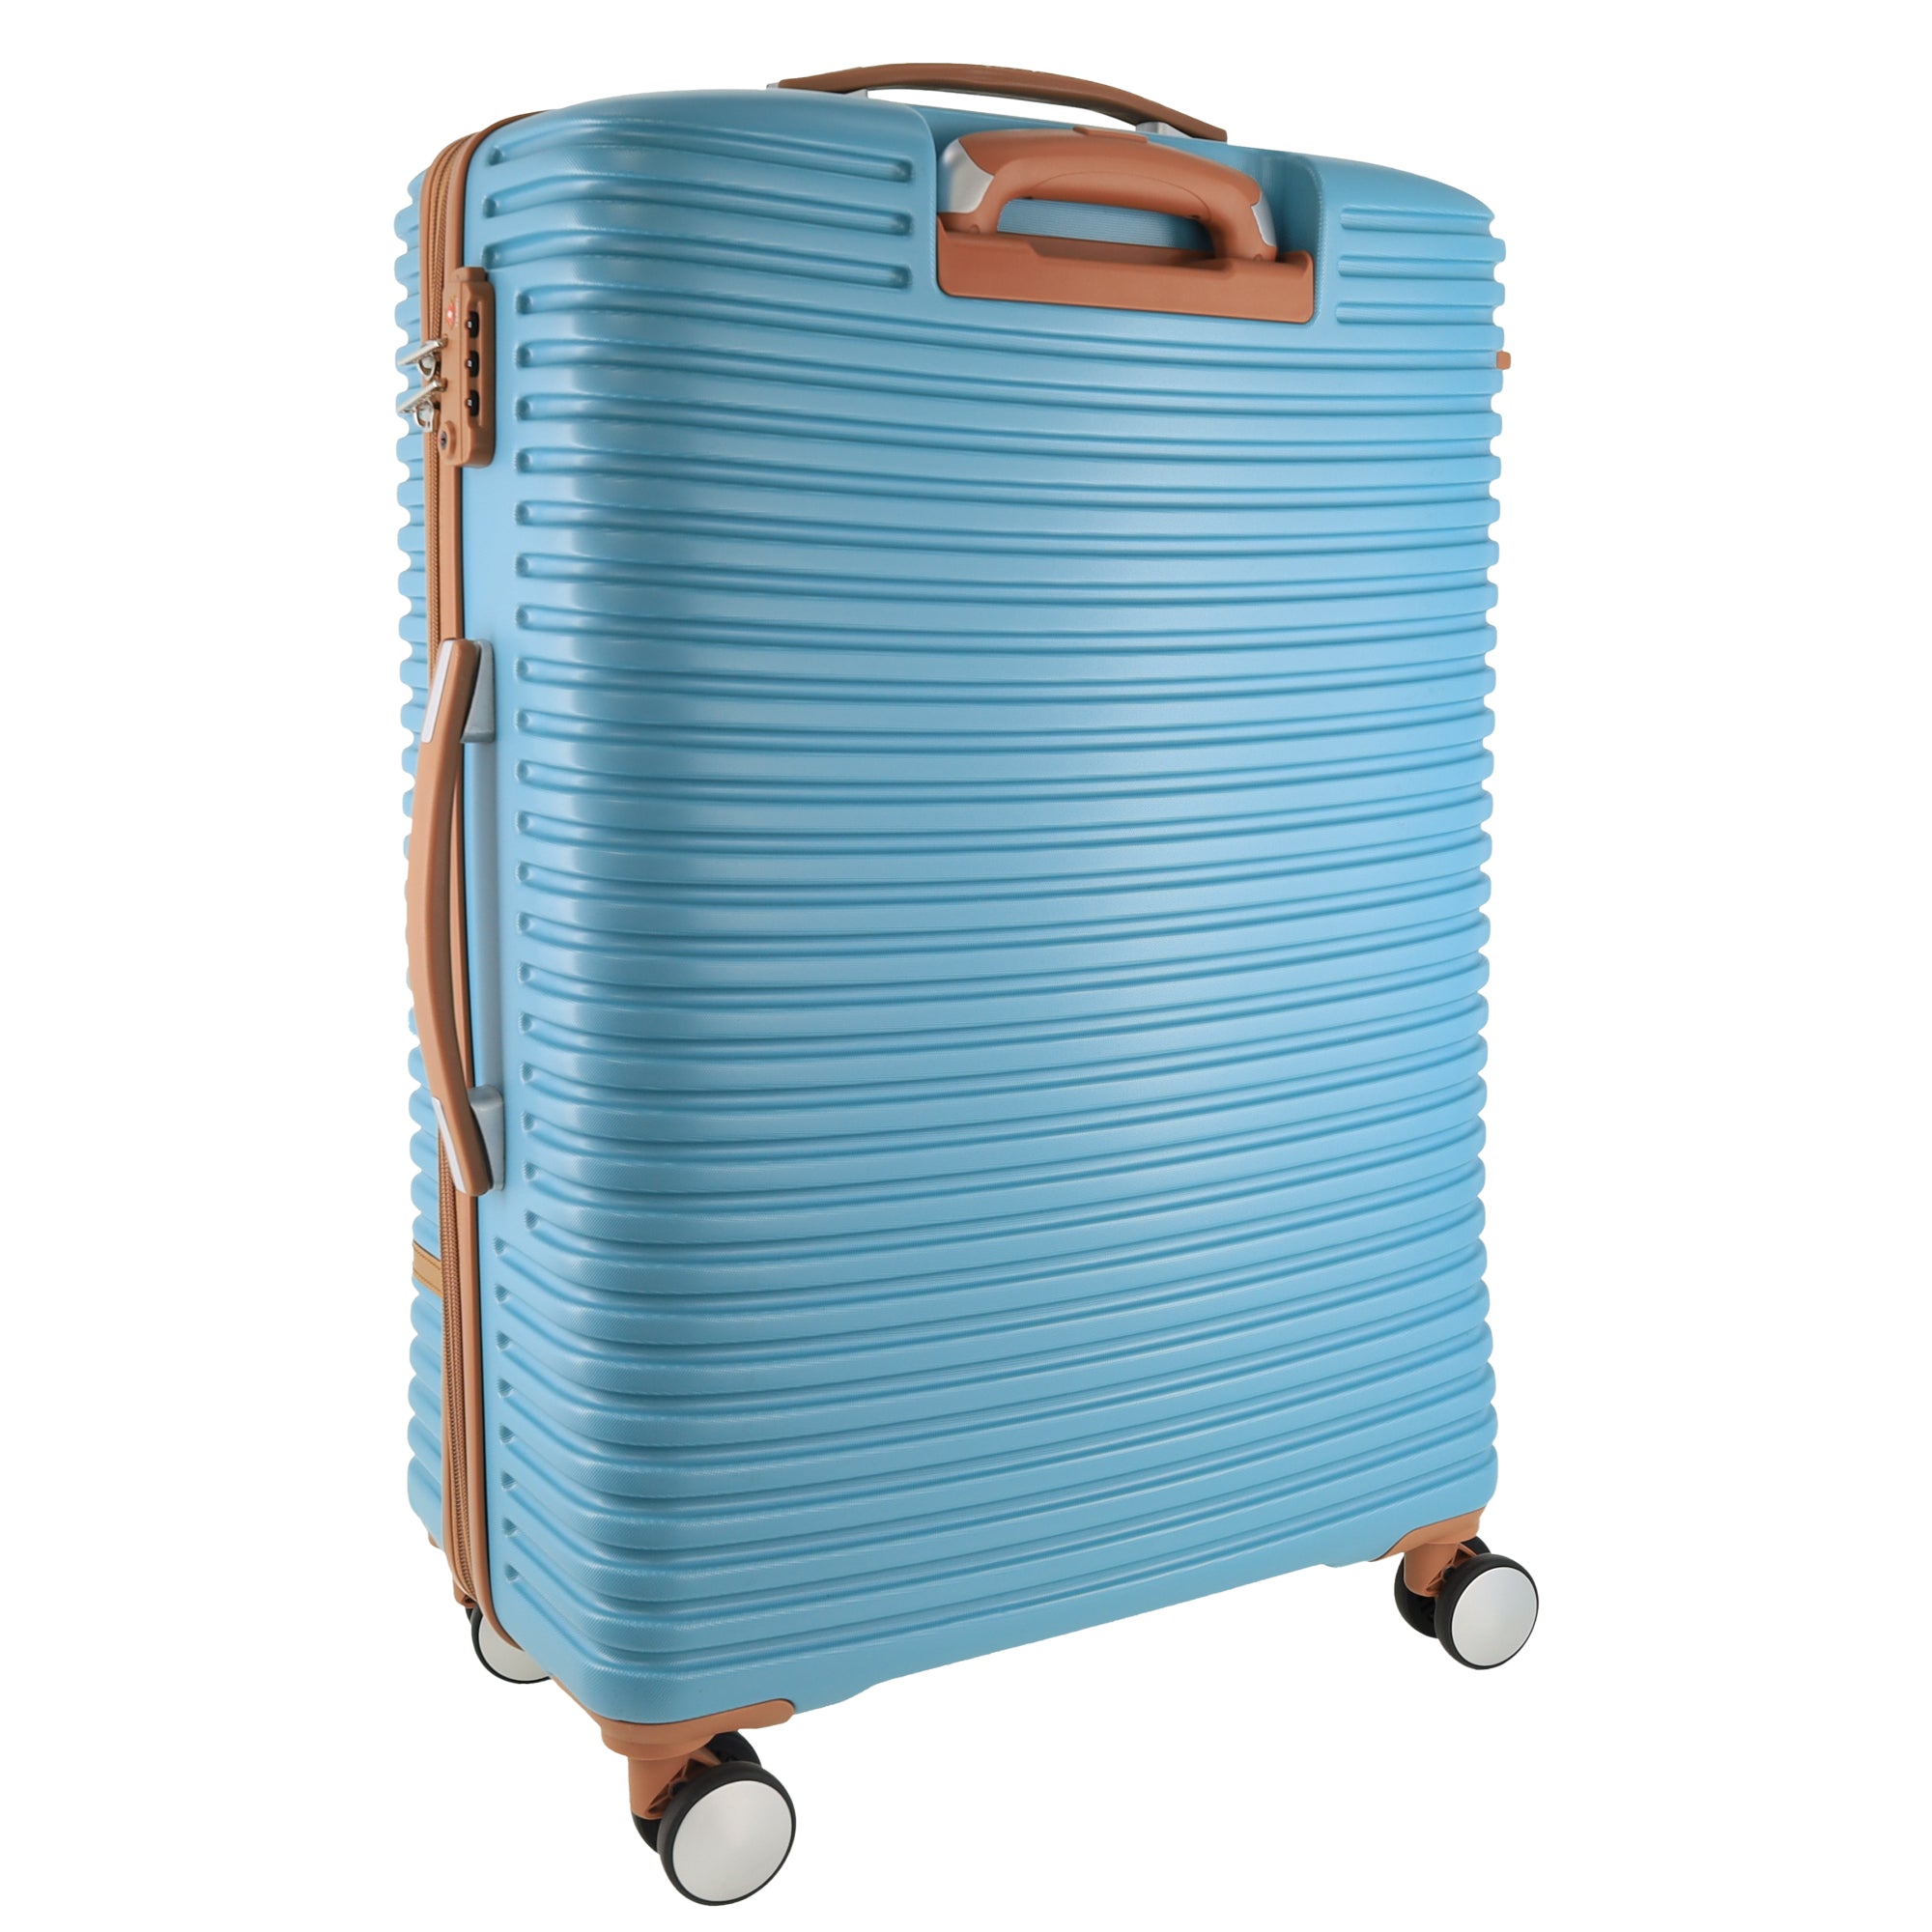 Pierre Cardin 70cm MEDIUM Hard Shell Suitcase in Blue